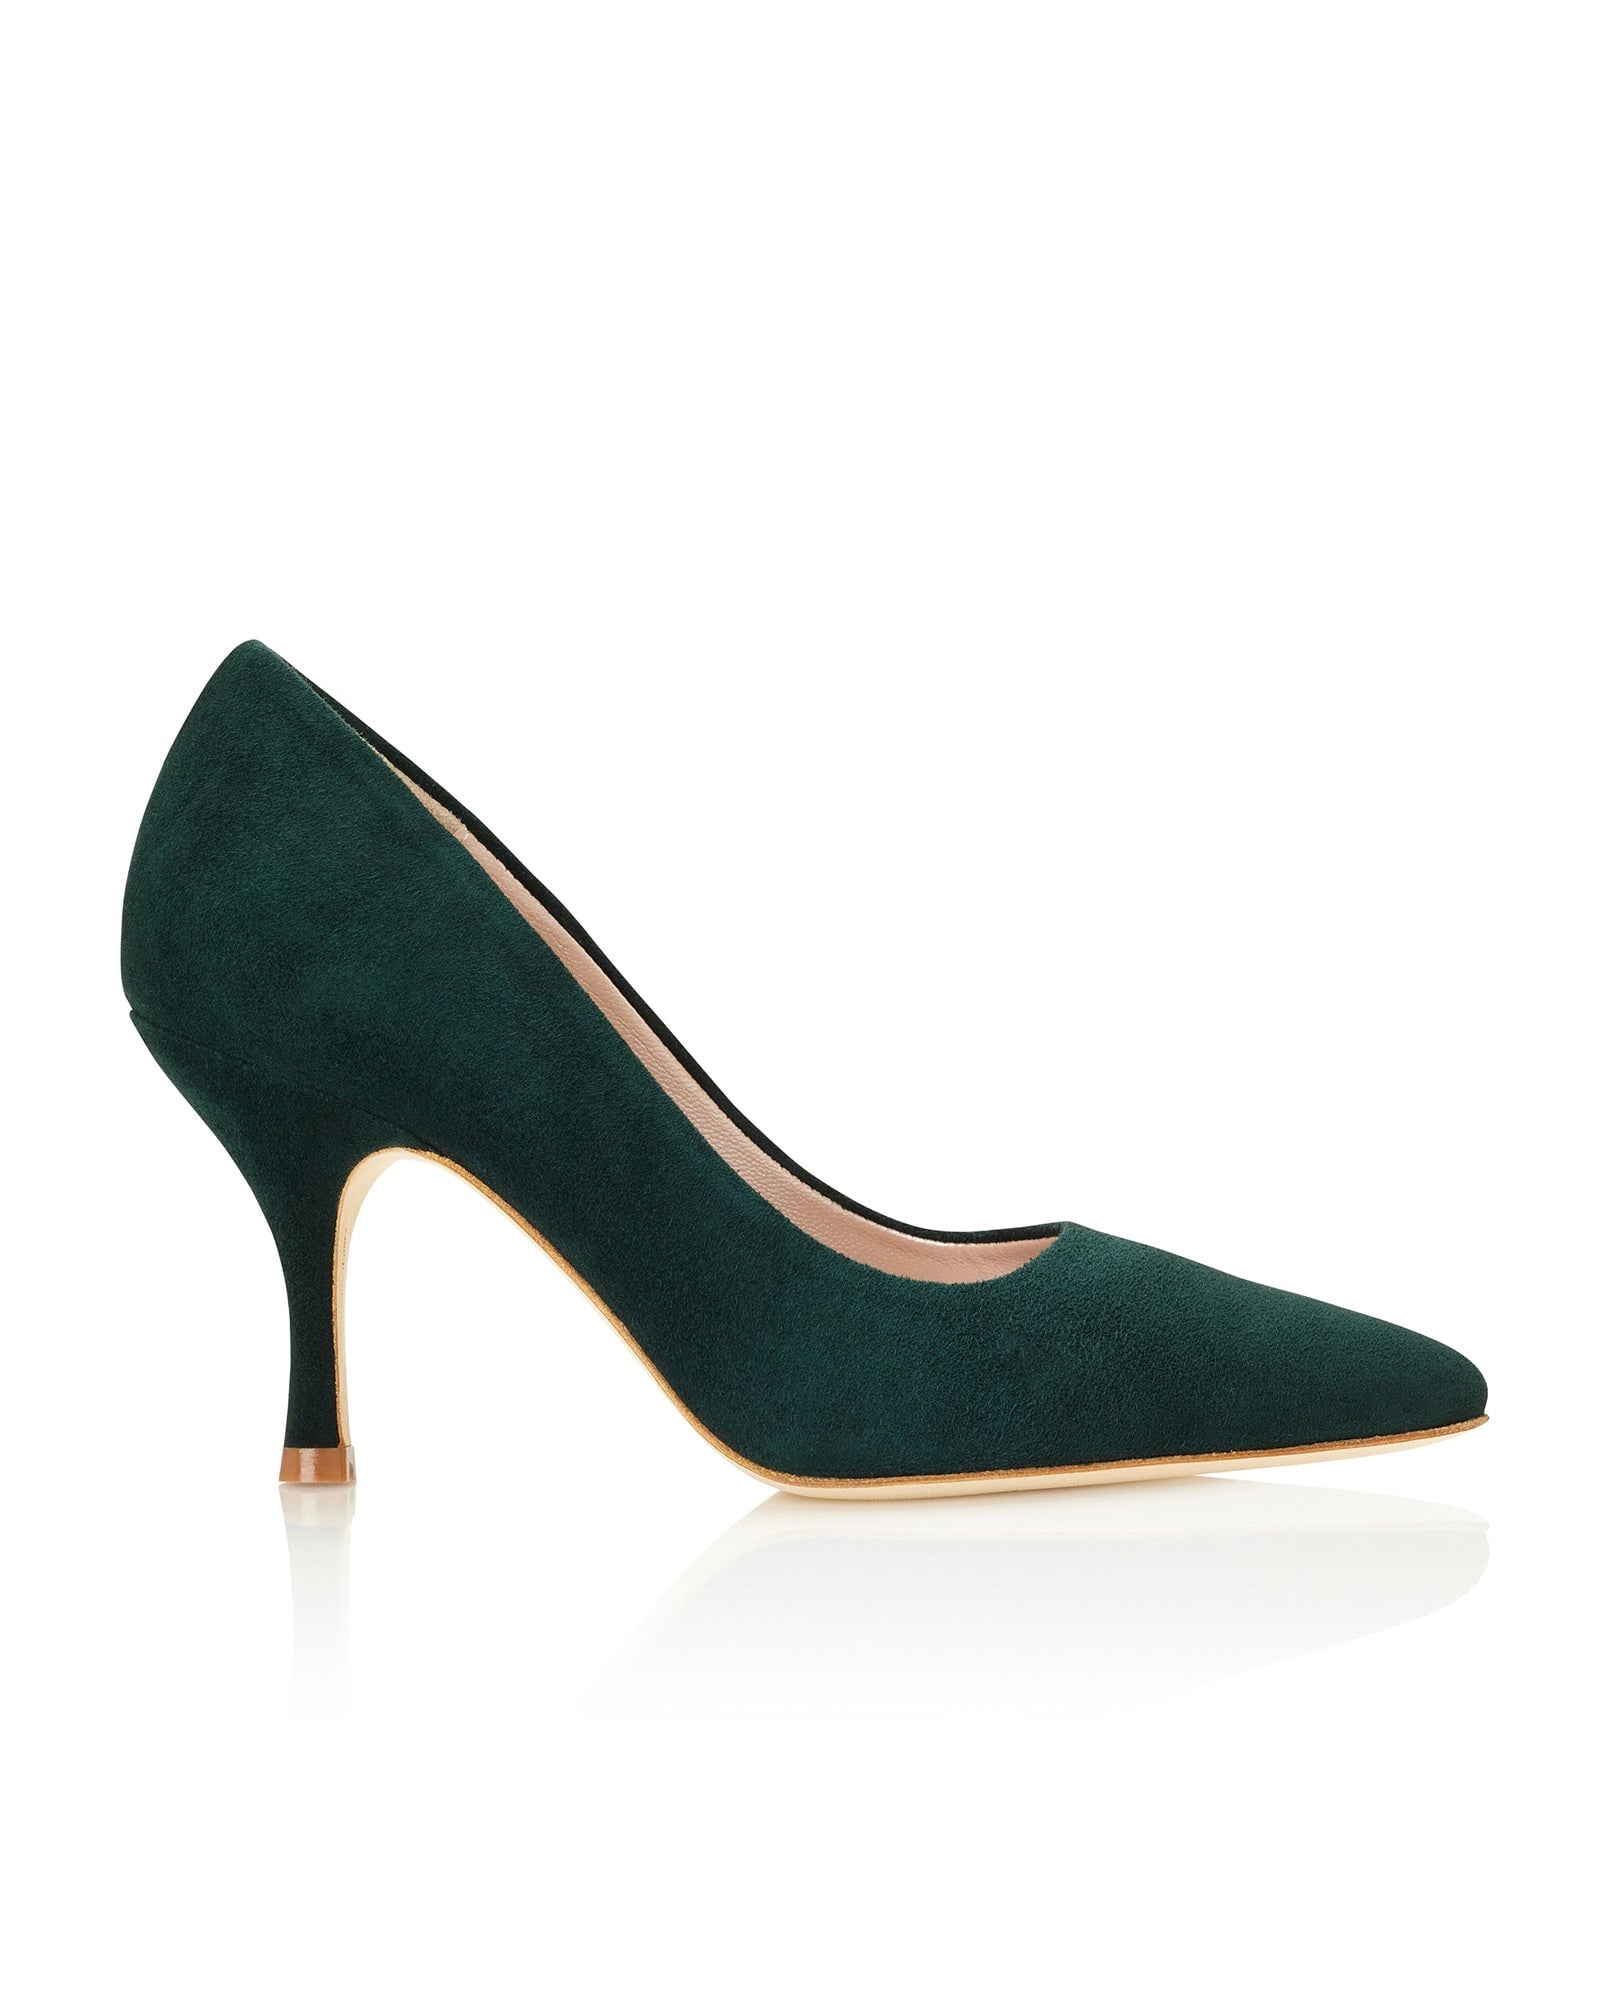 Olivia Greenery Fashion Shoe Rich Green Suede Court Shoe  image